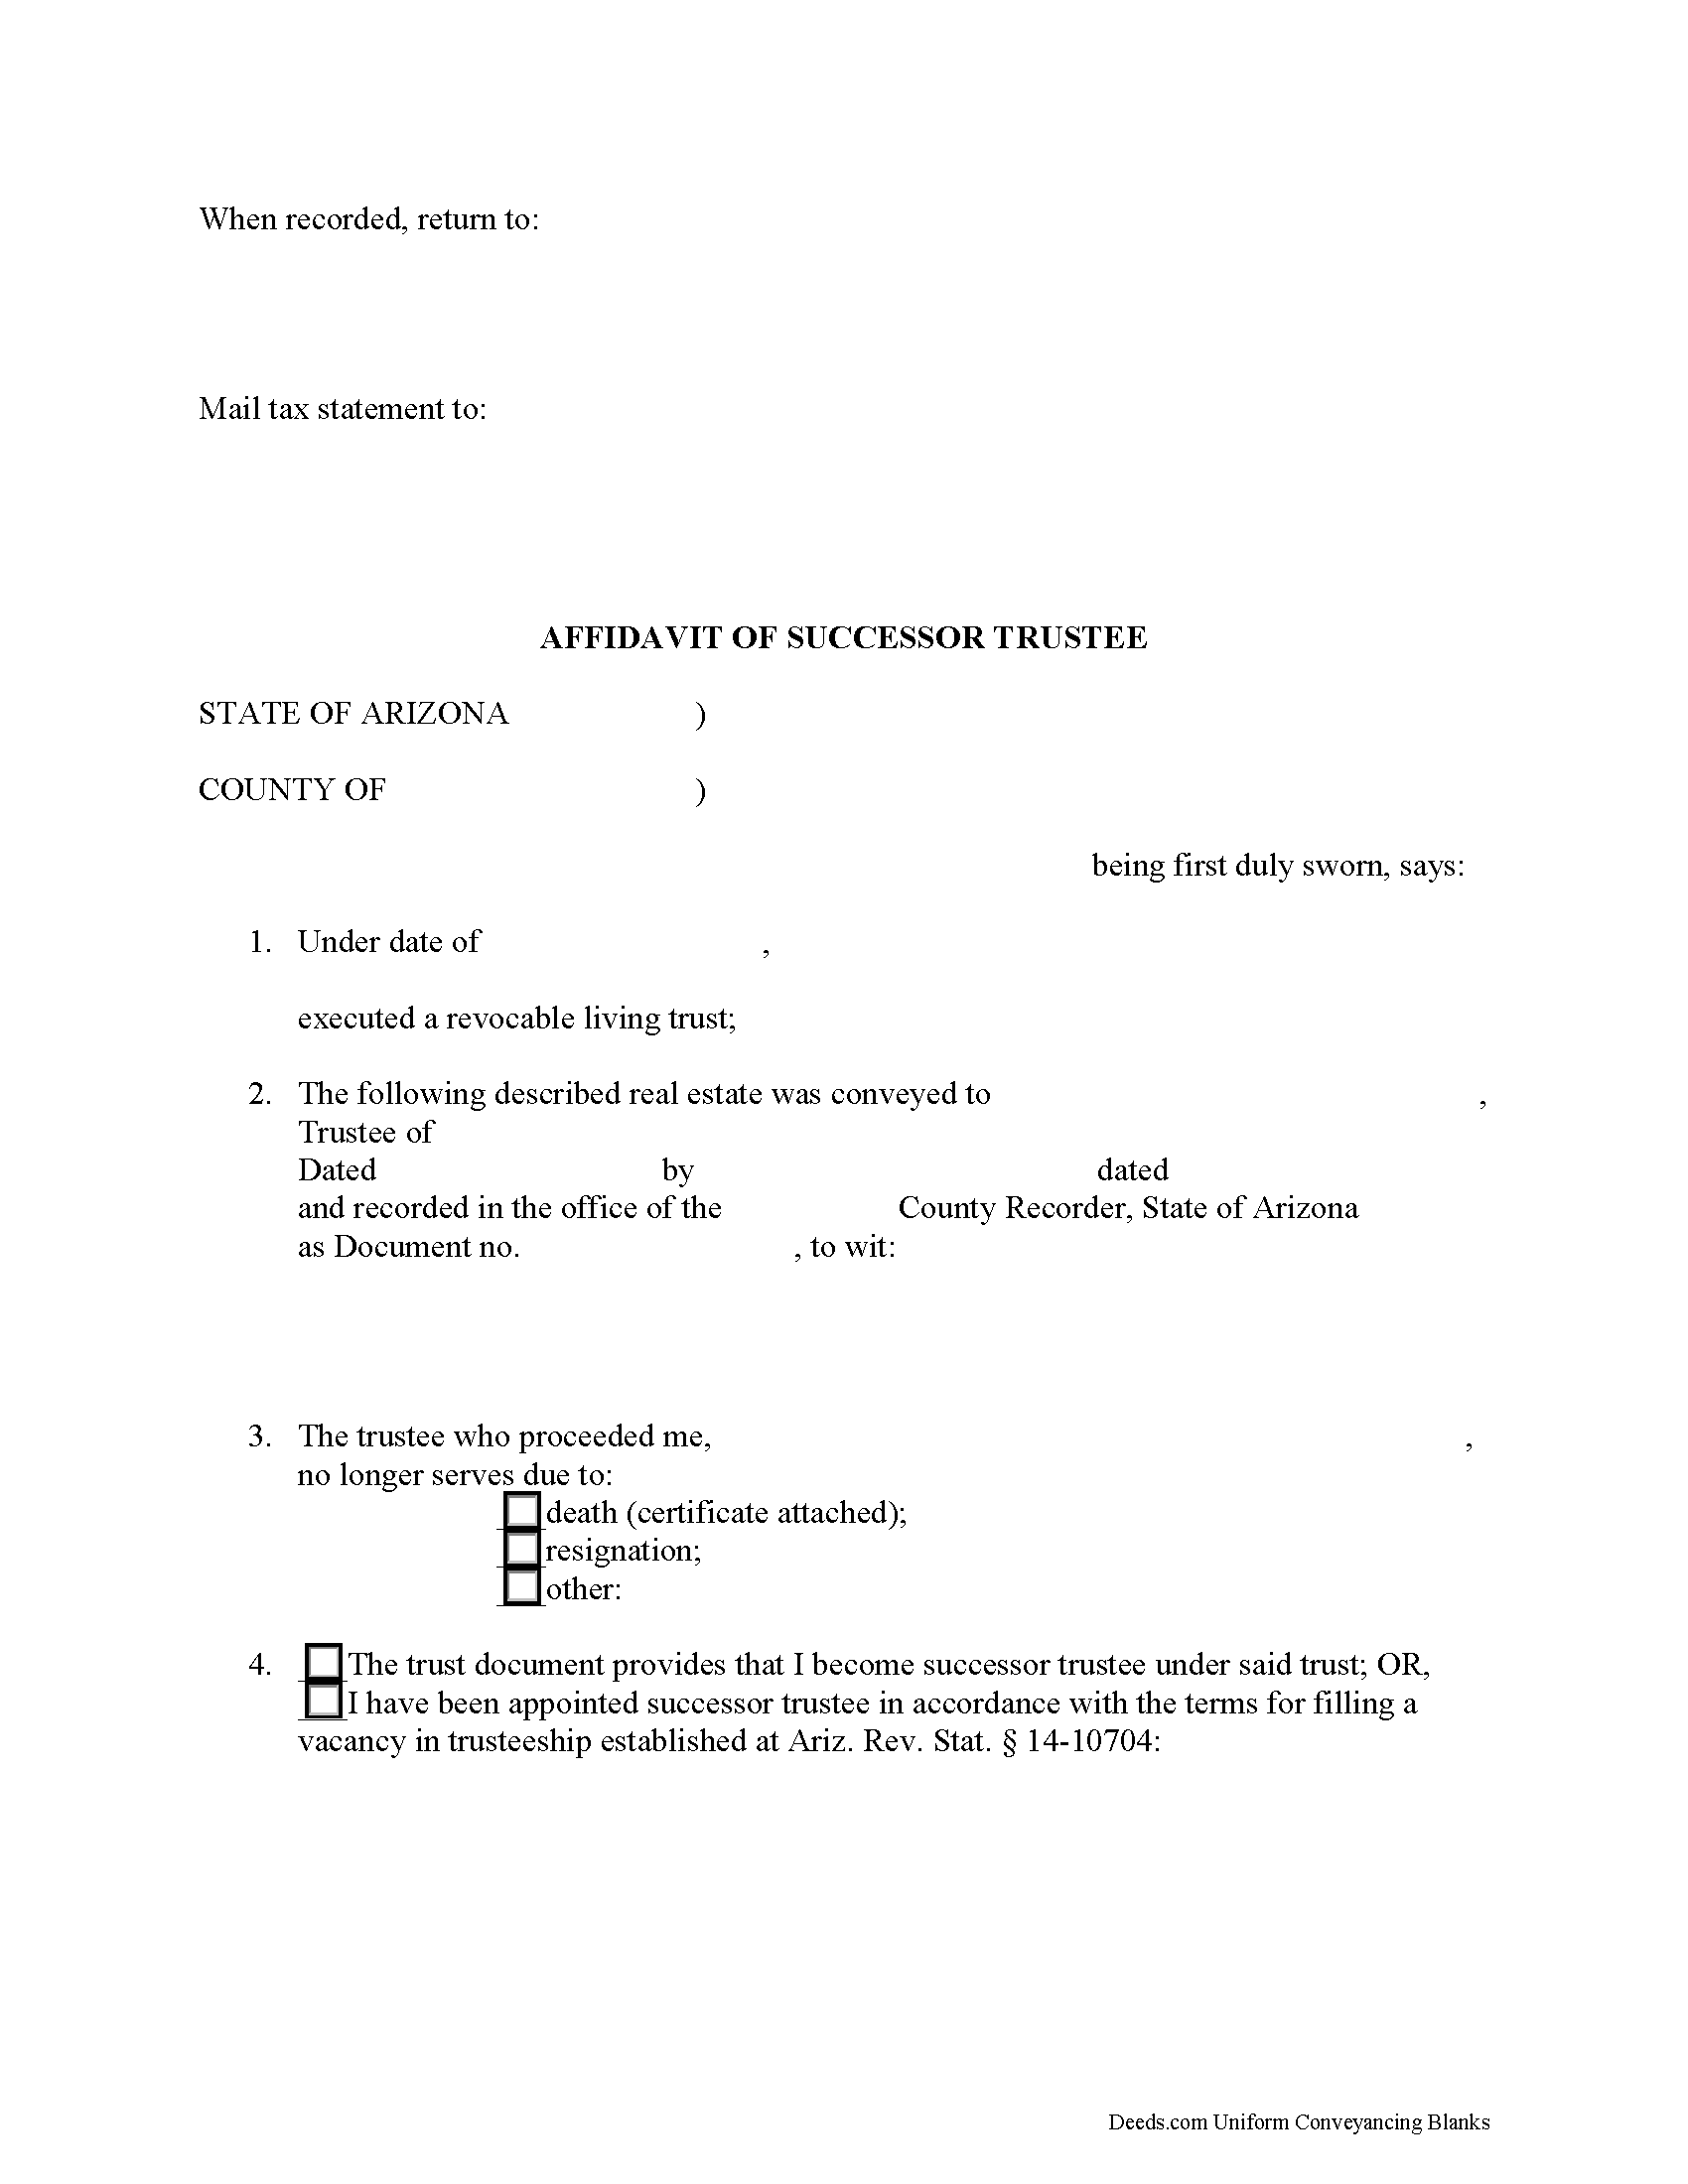 Affidavit of Successor Trustee Form